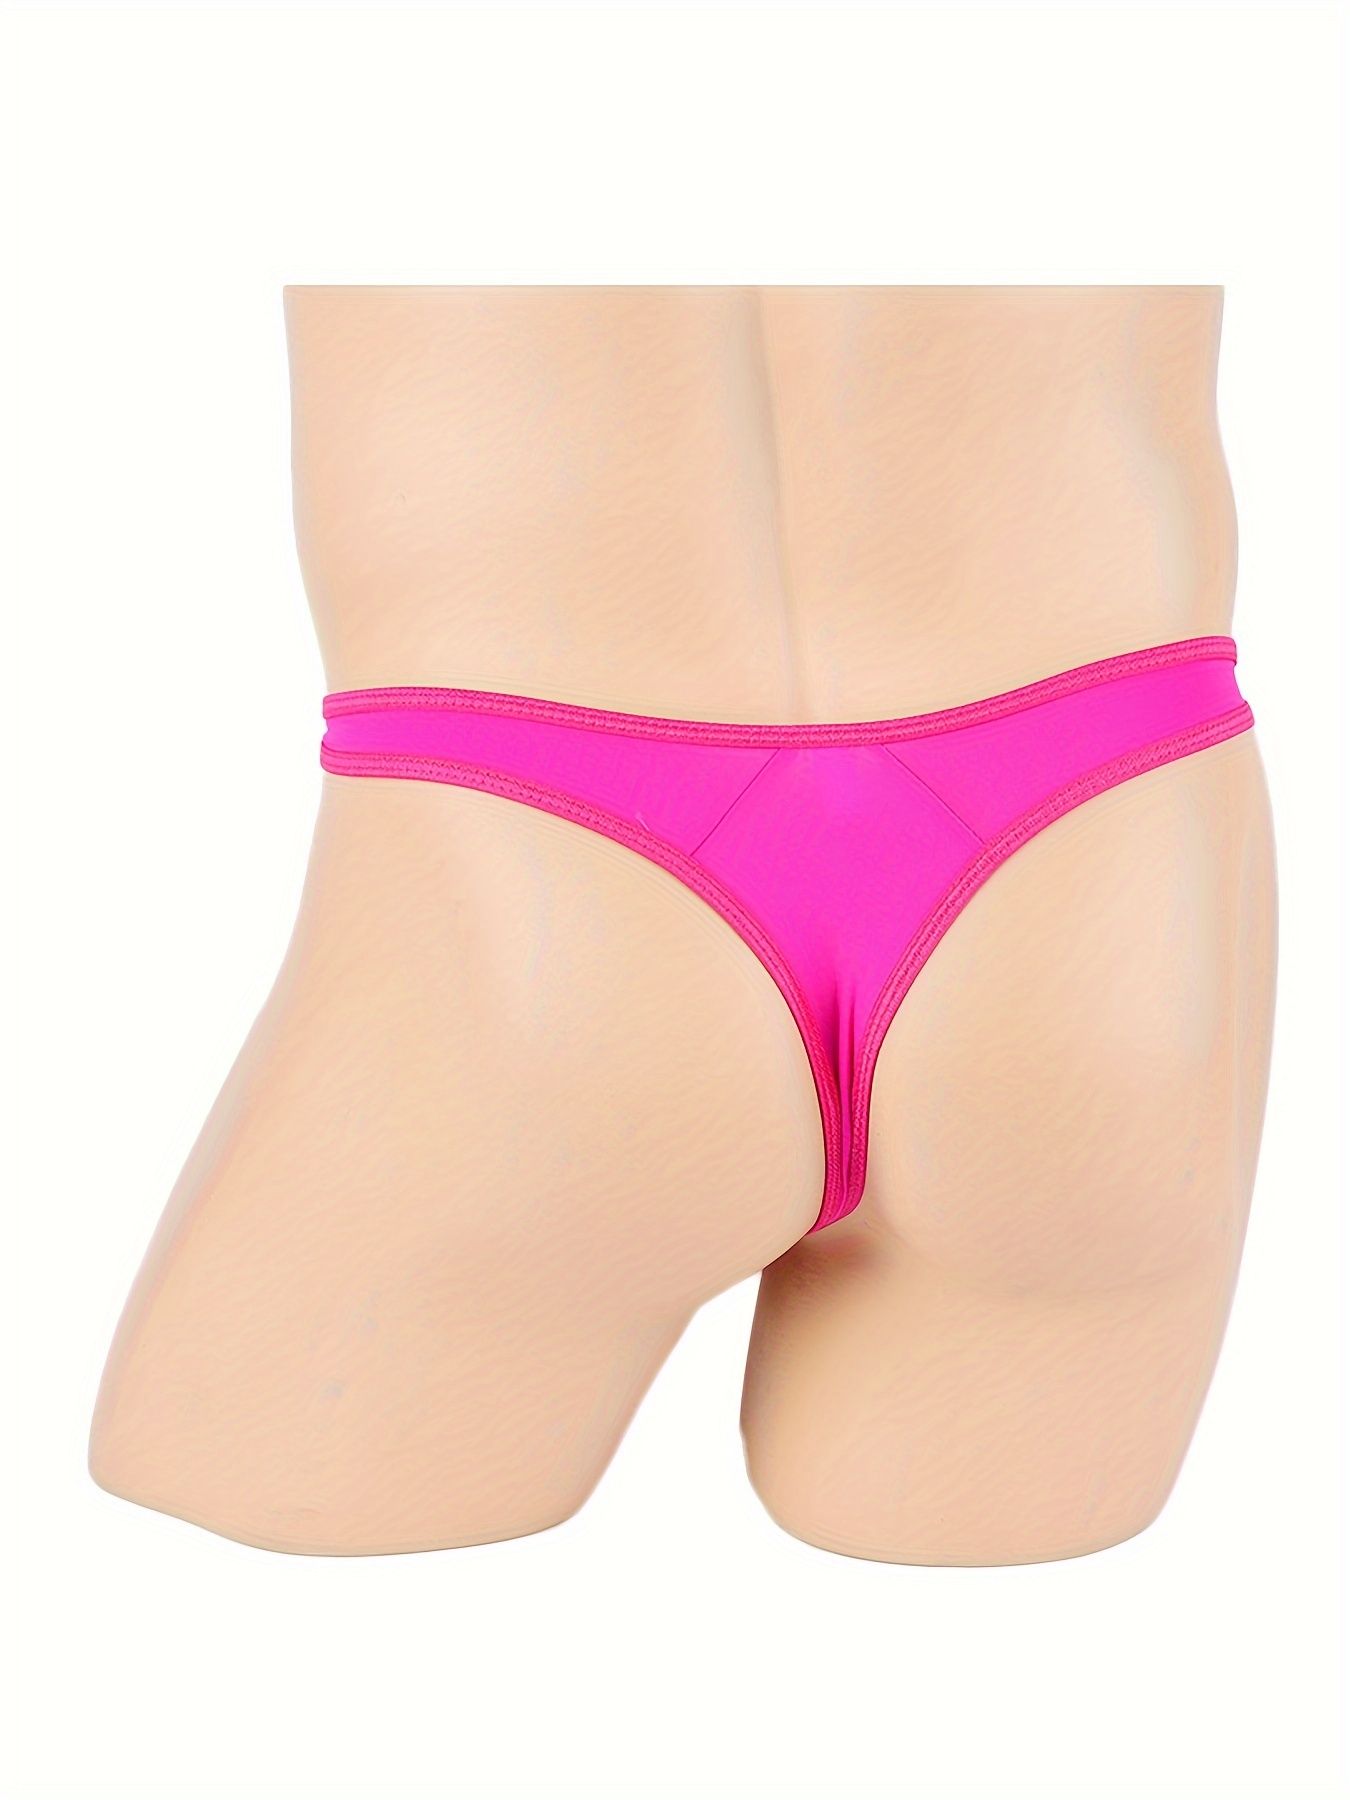 Sexy Women See Through G-string Panties Thongs Lingerie Tangas Underwear  Briefs